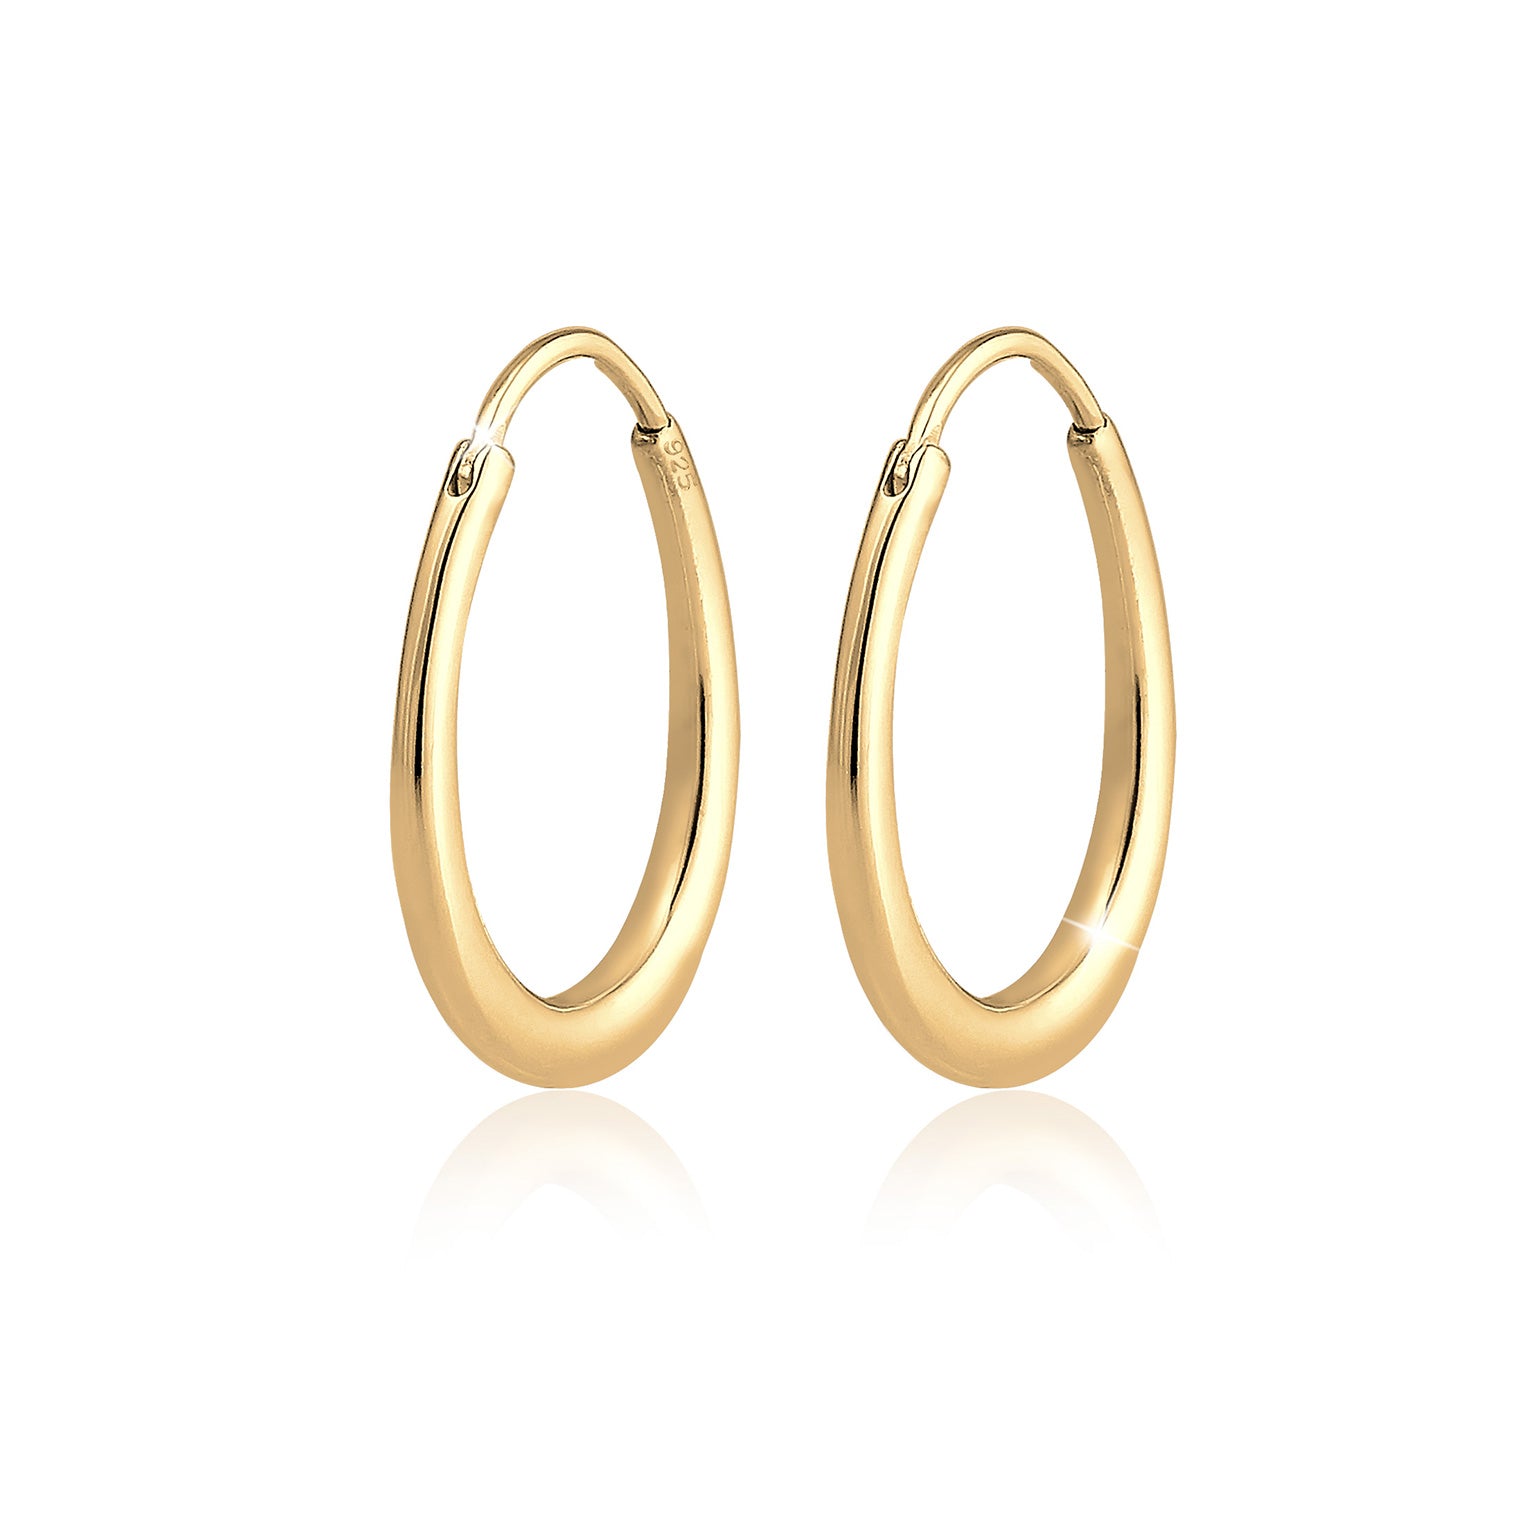 Earrings online Elli Jewelry variations many – at | Elli in